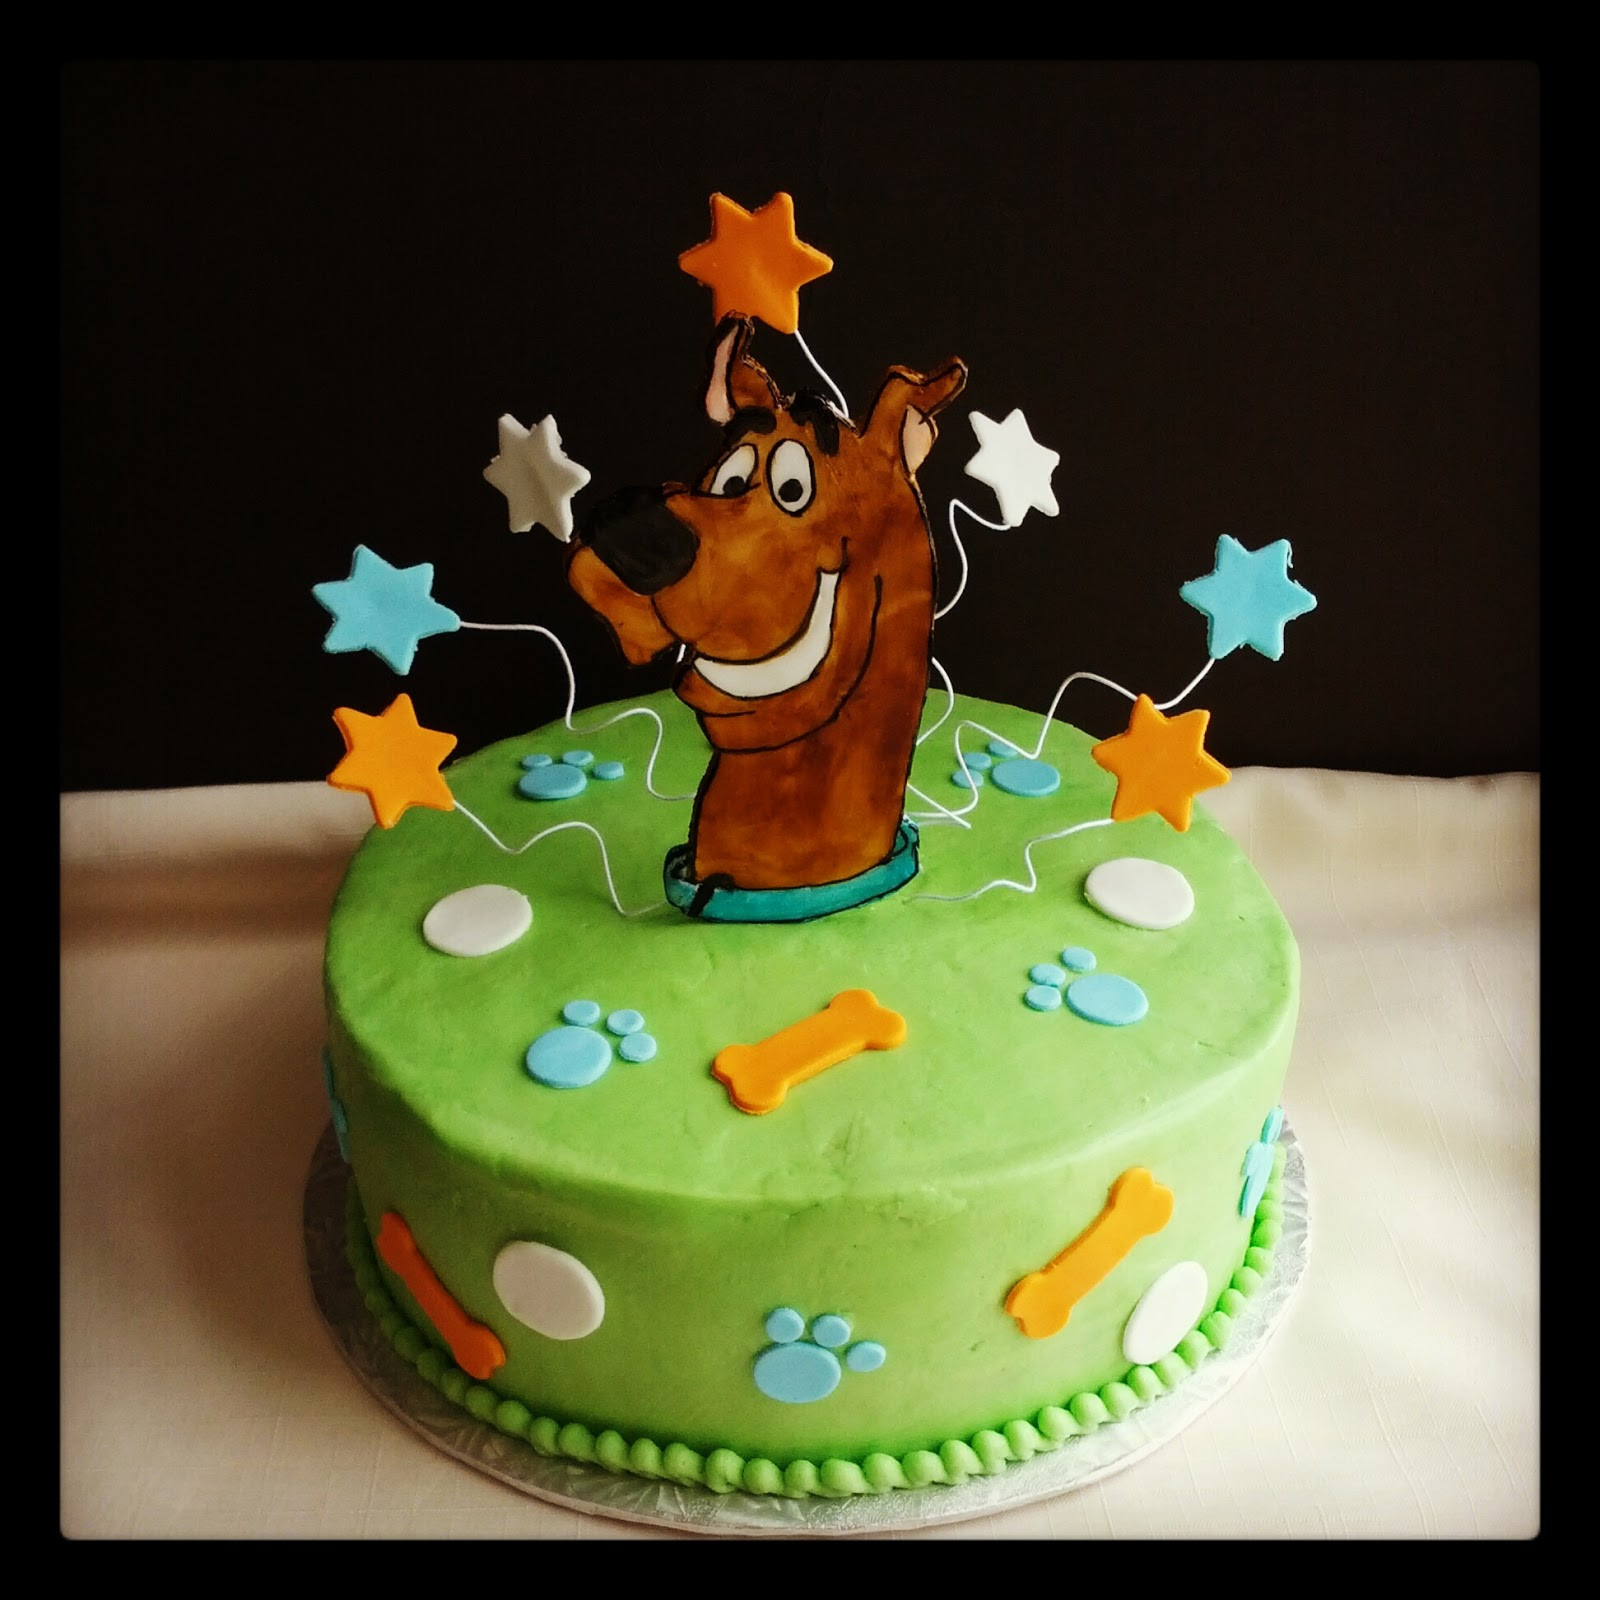 Scooby Doo Birthday Cake
 Second Generation Cake Design Scooby Doo Birthday Cake